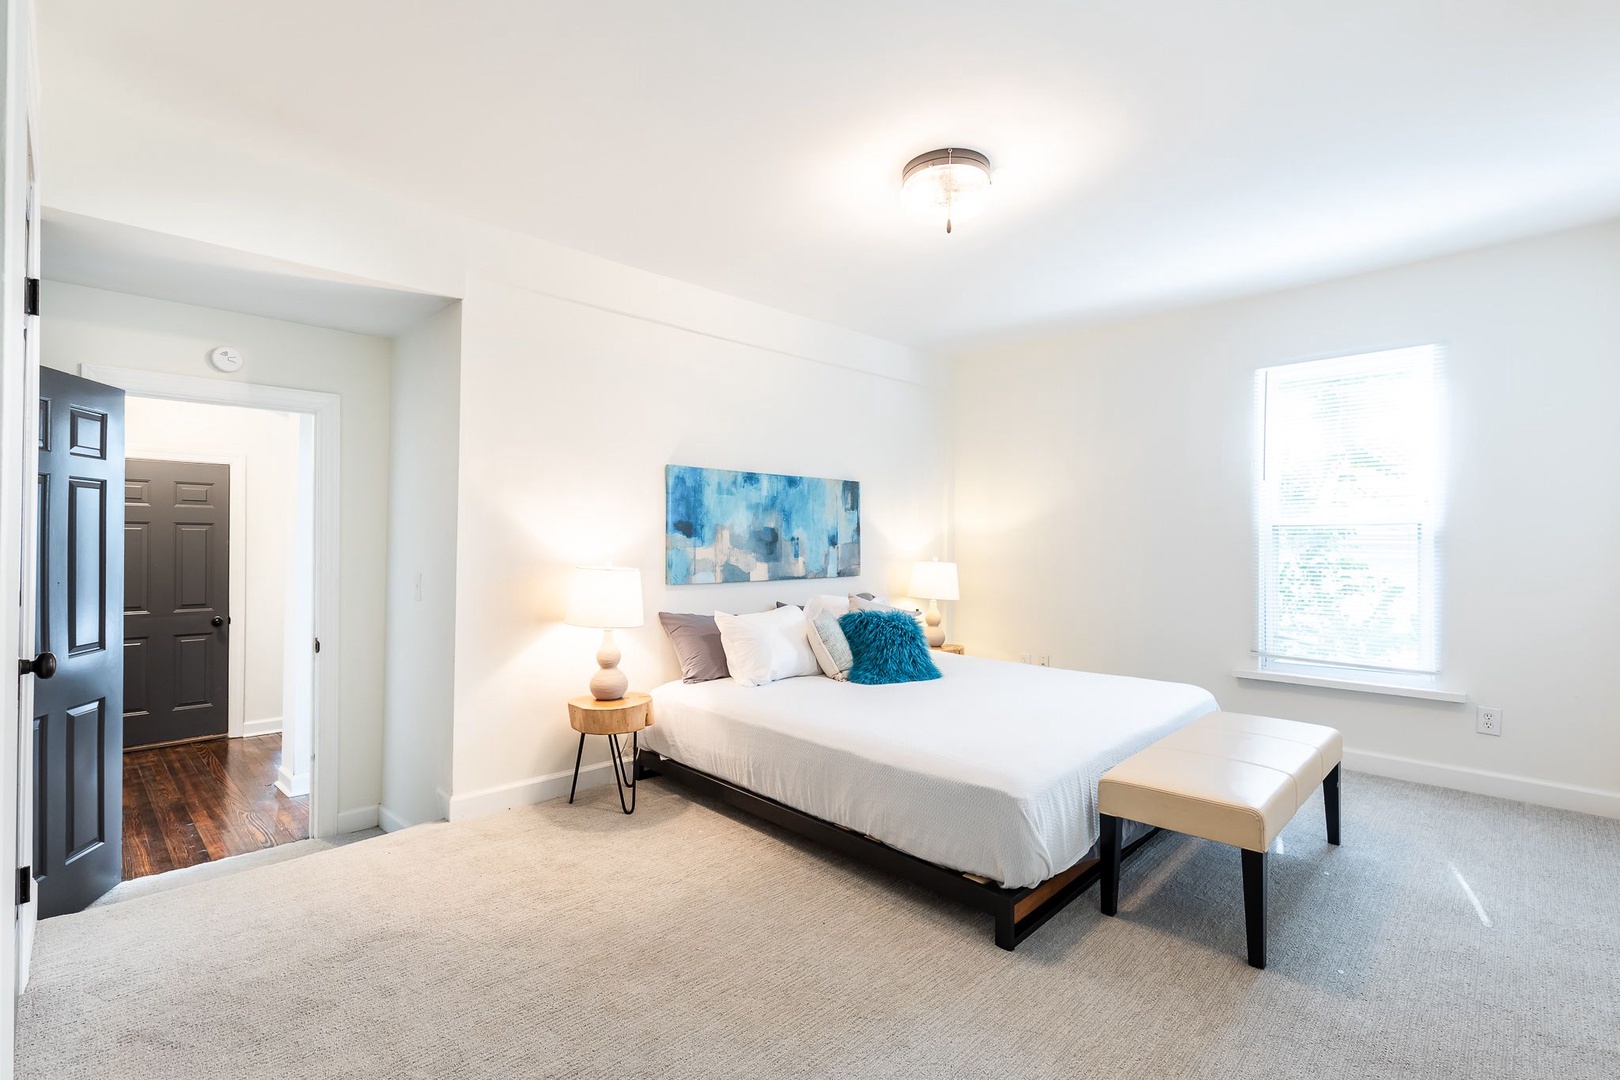 Apt 1 – The tranquil king bedroom is spacious & elegant